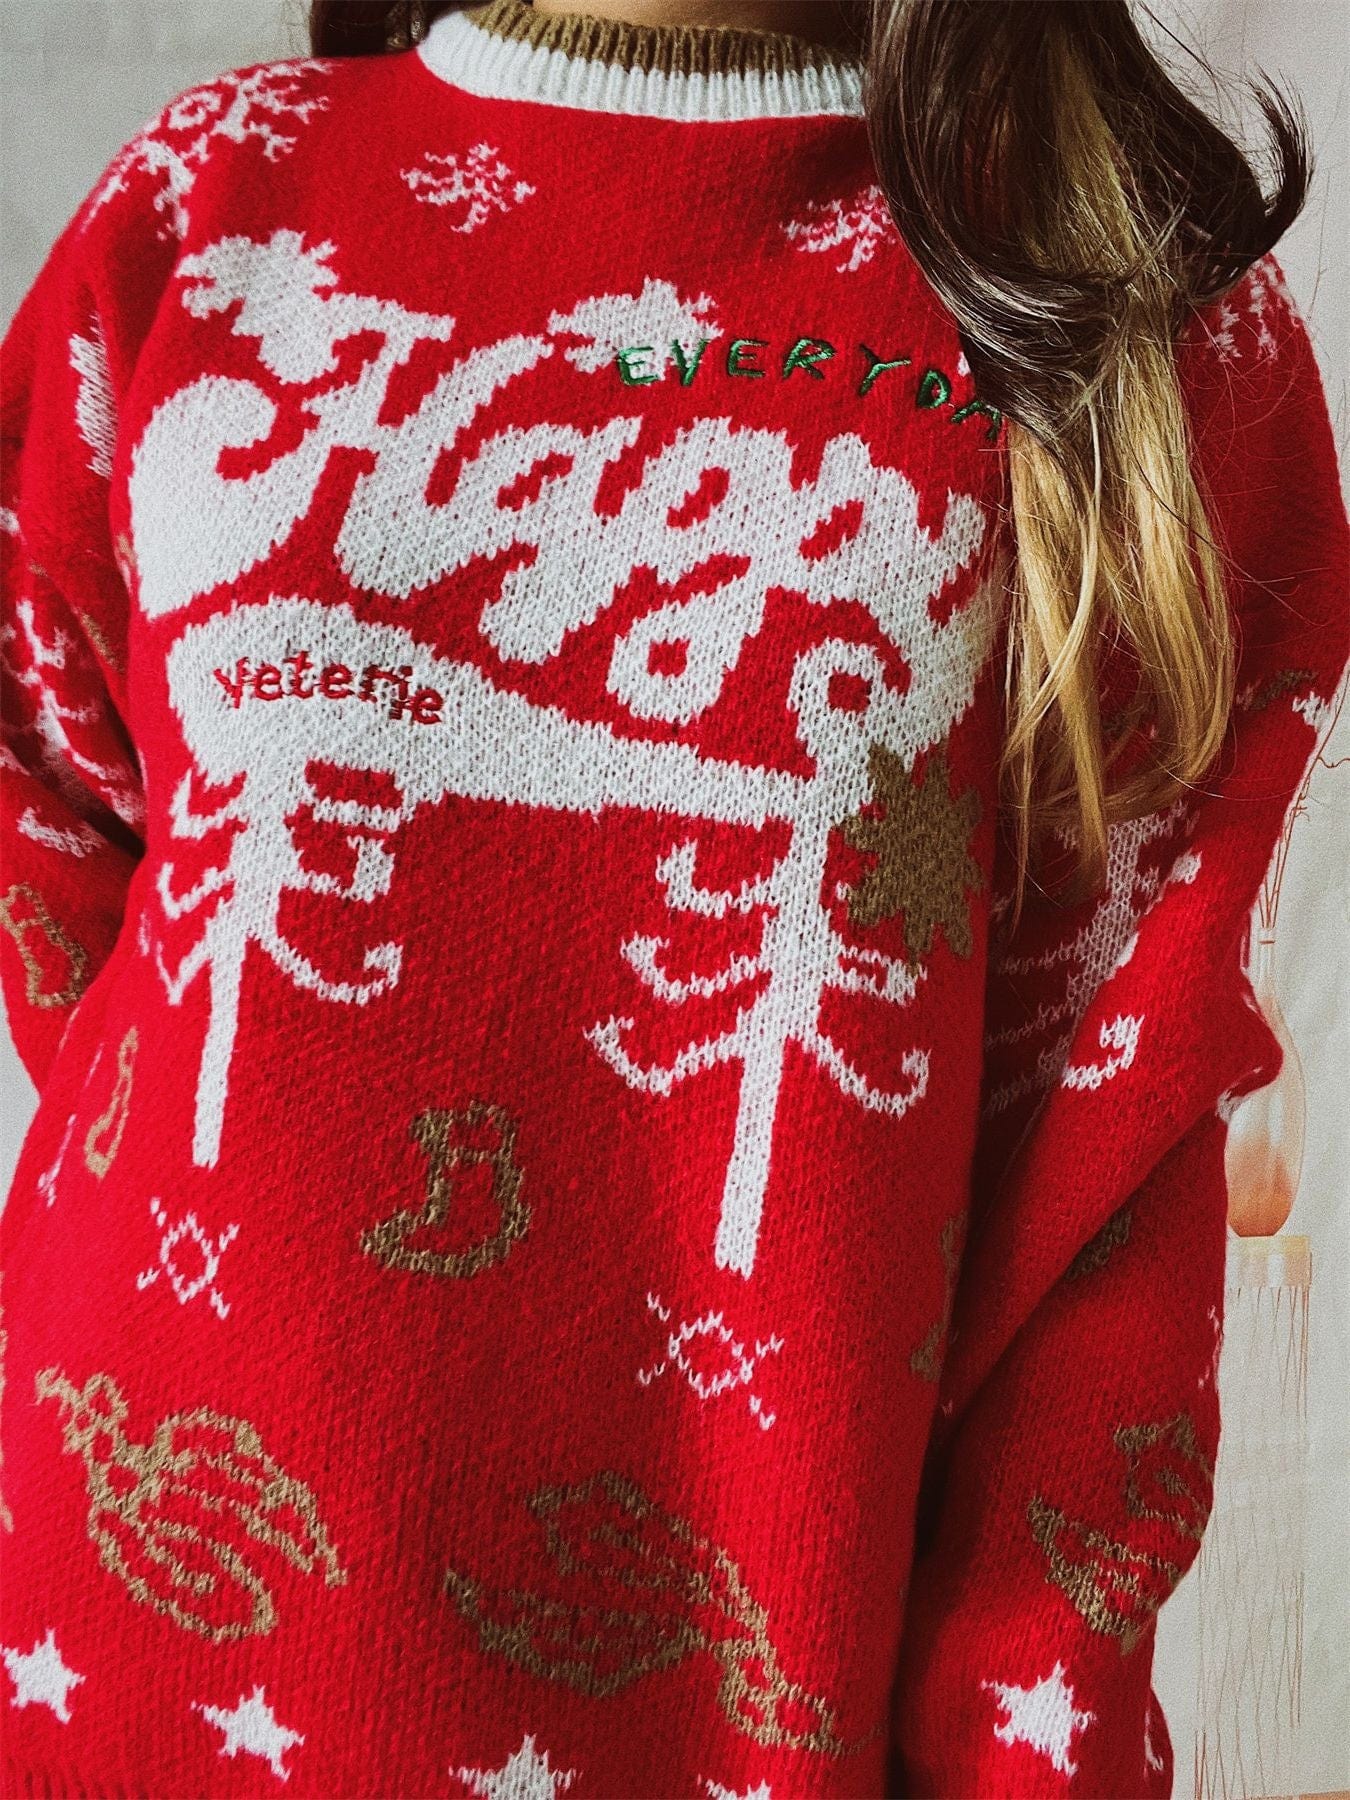 wickedafstore Everyday Happy Christmas Sweater